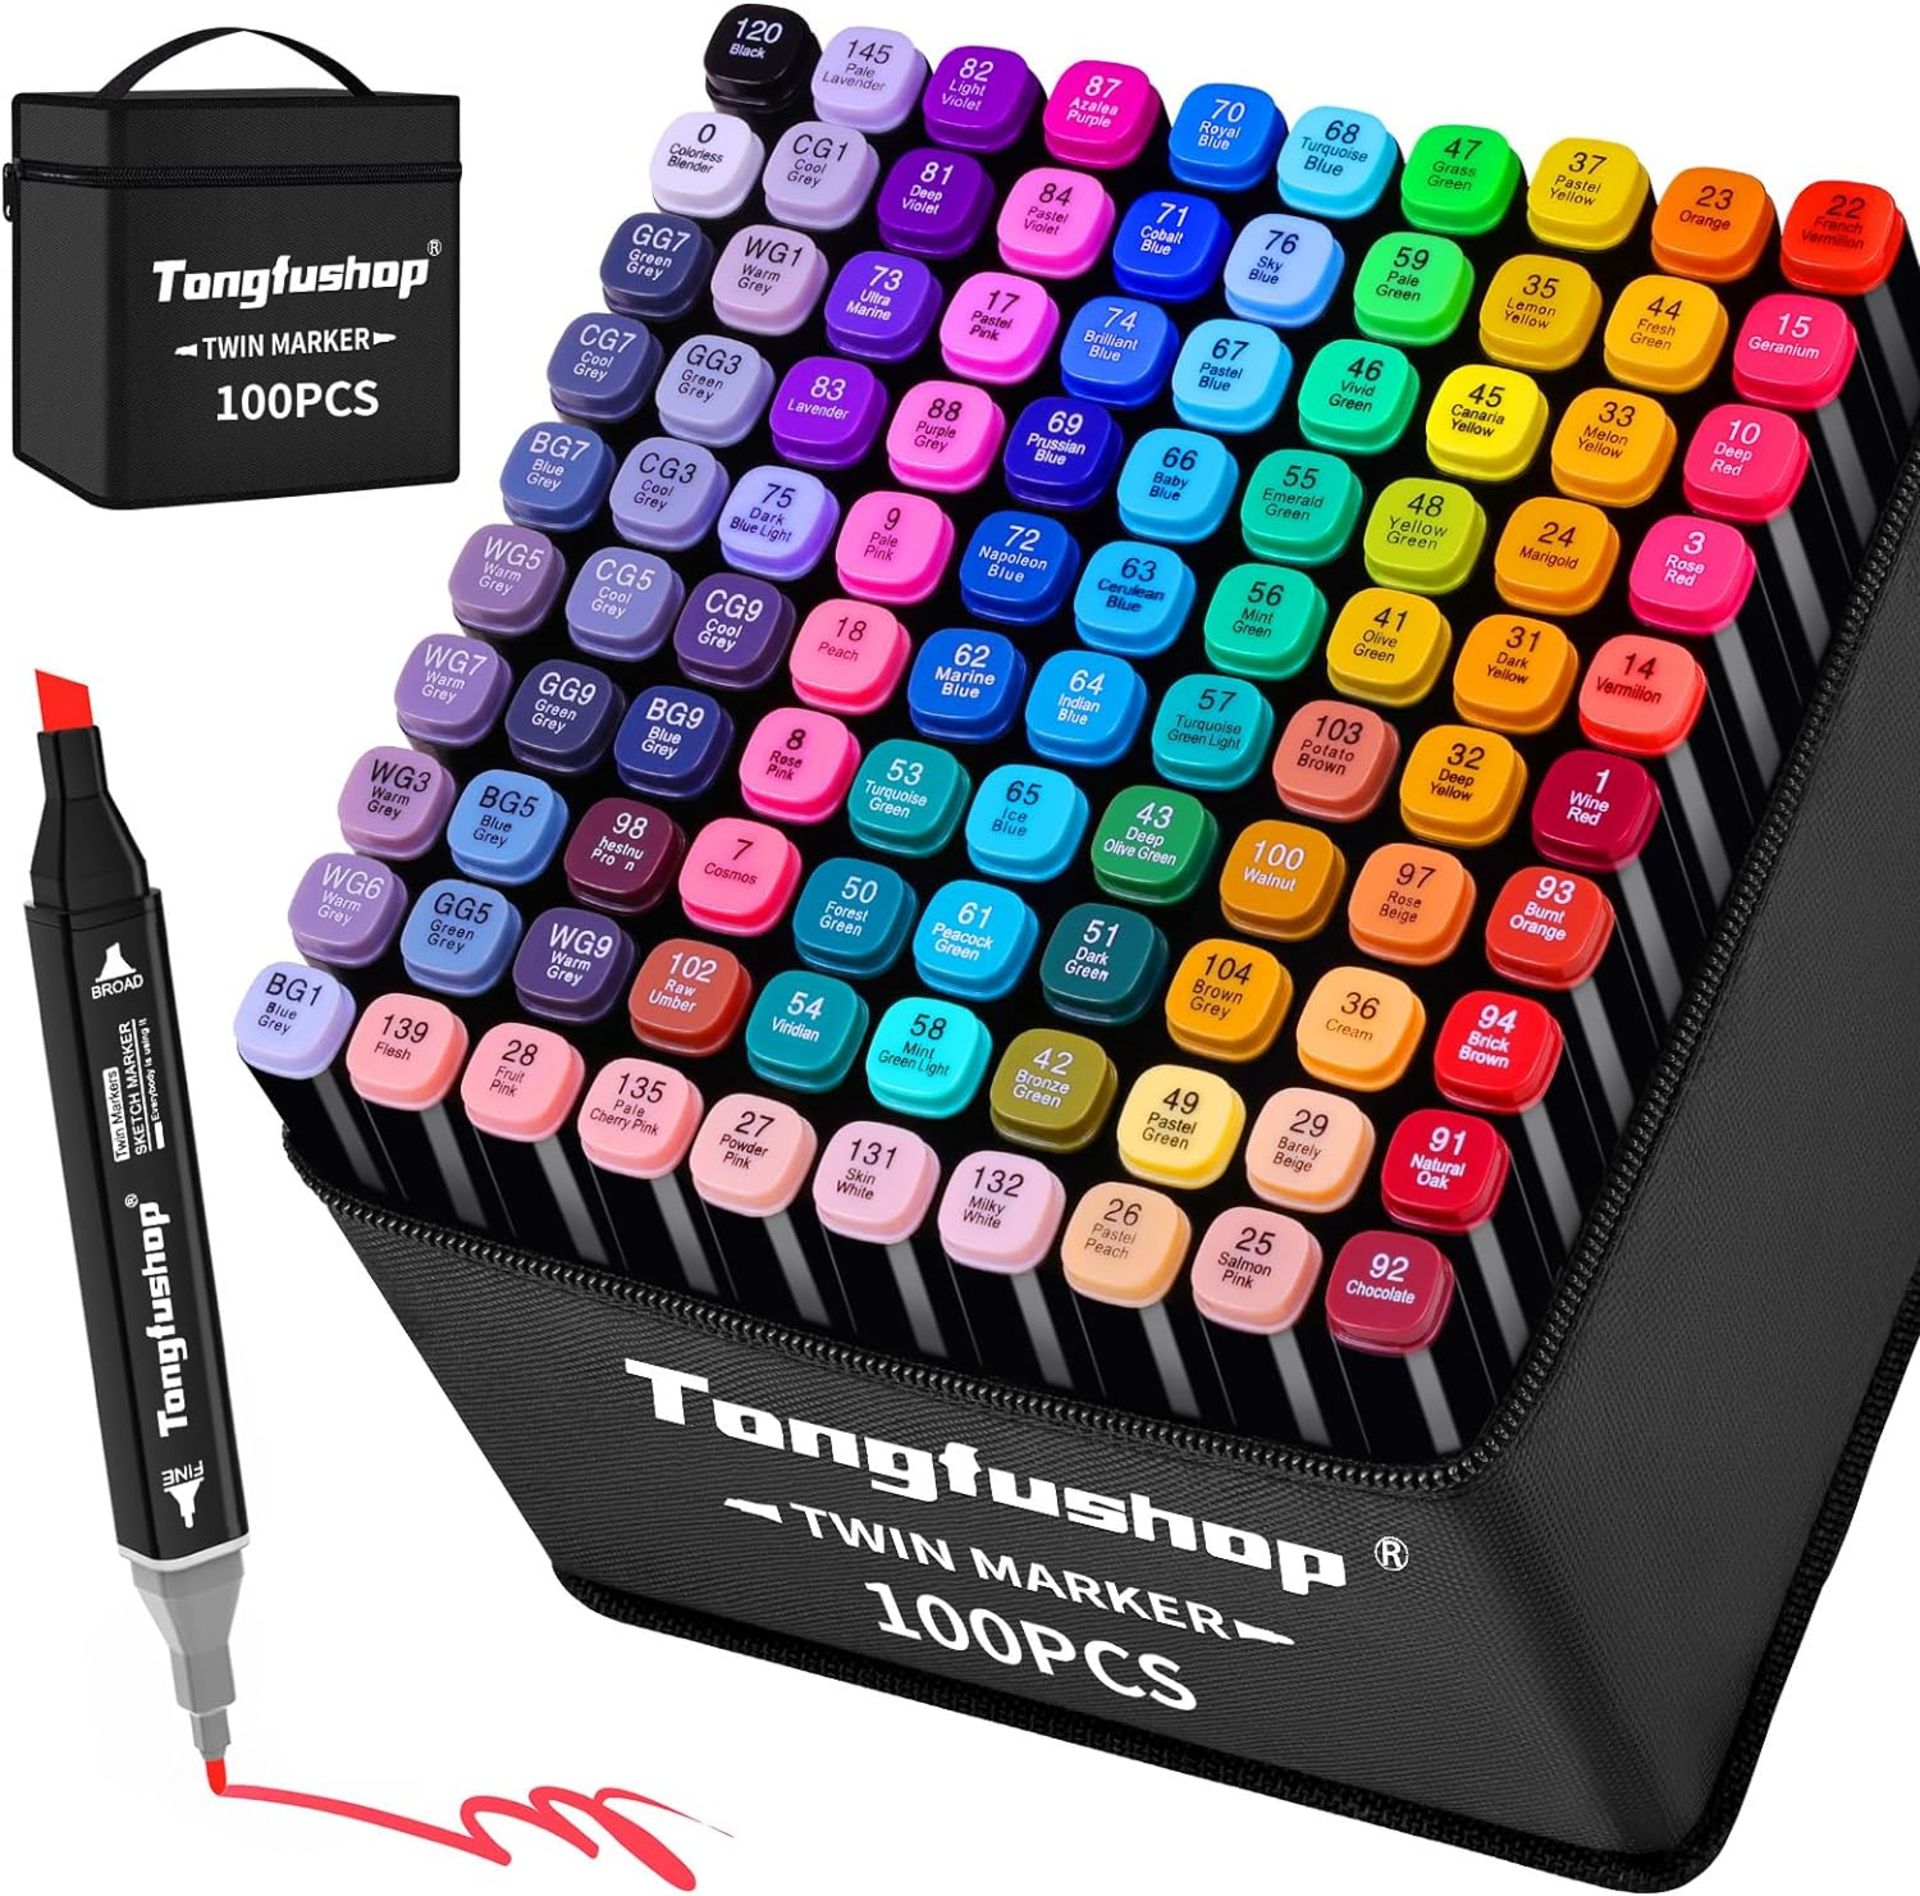 RRP £27.99 Tongfushop 100 Coloured Marker Set, Paint Pens, Colouring Pens for Kids & Adults, Dual